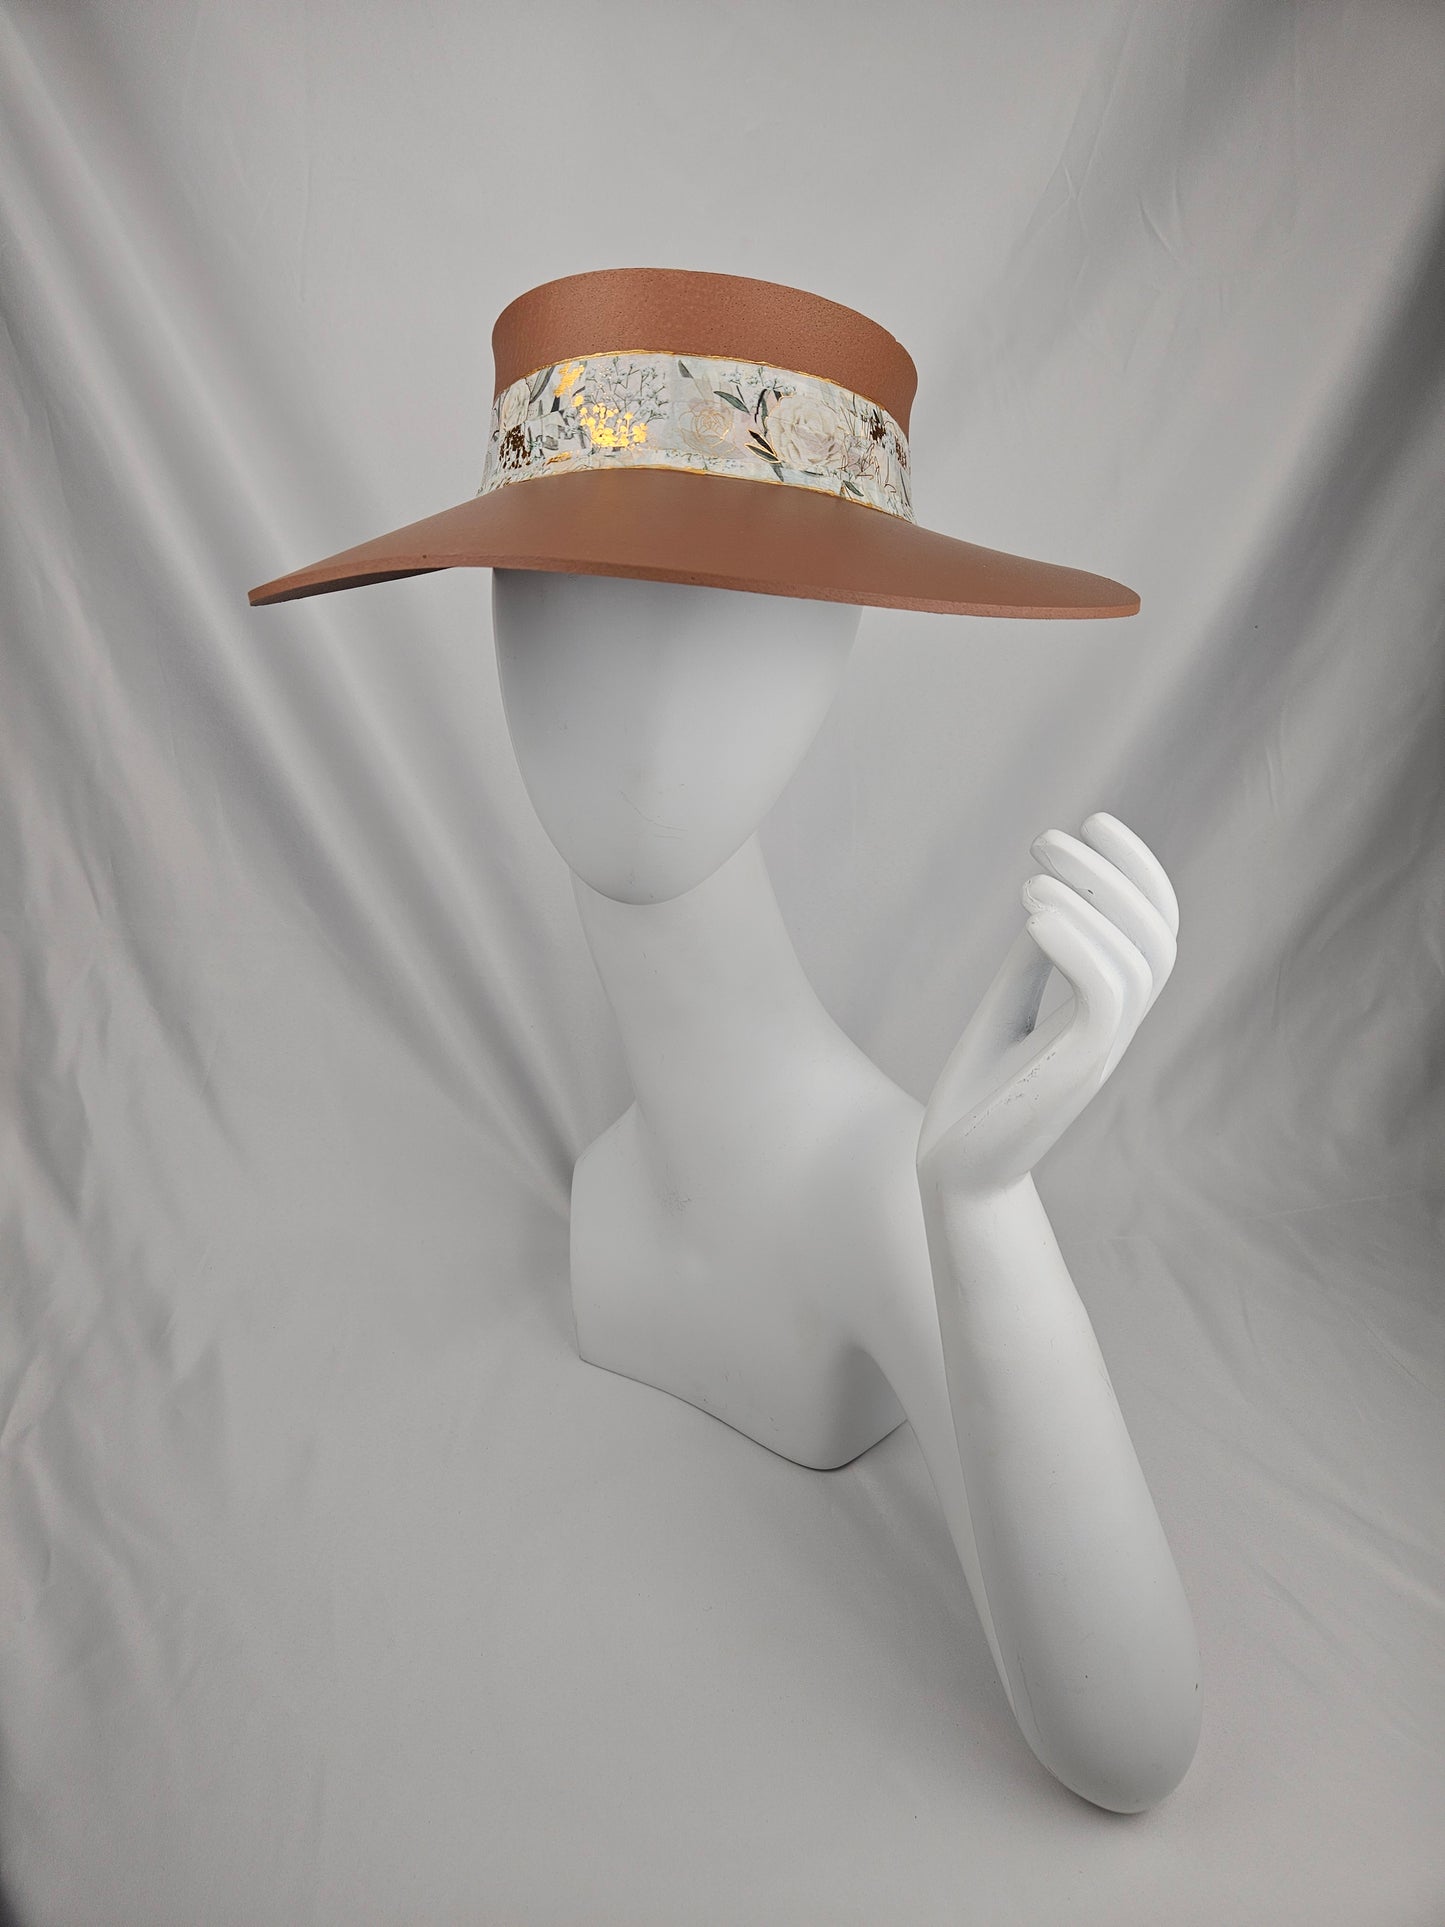 Caramel Brown Audrey Sun Visor Hat with Stylish White and Gold Floral Band: UV Resistant, Walks, Brunch, Tea, Golf, Wedding, Church, No Headache, Easter, Pool, Beach, Big Brim